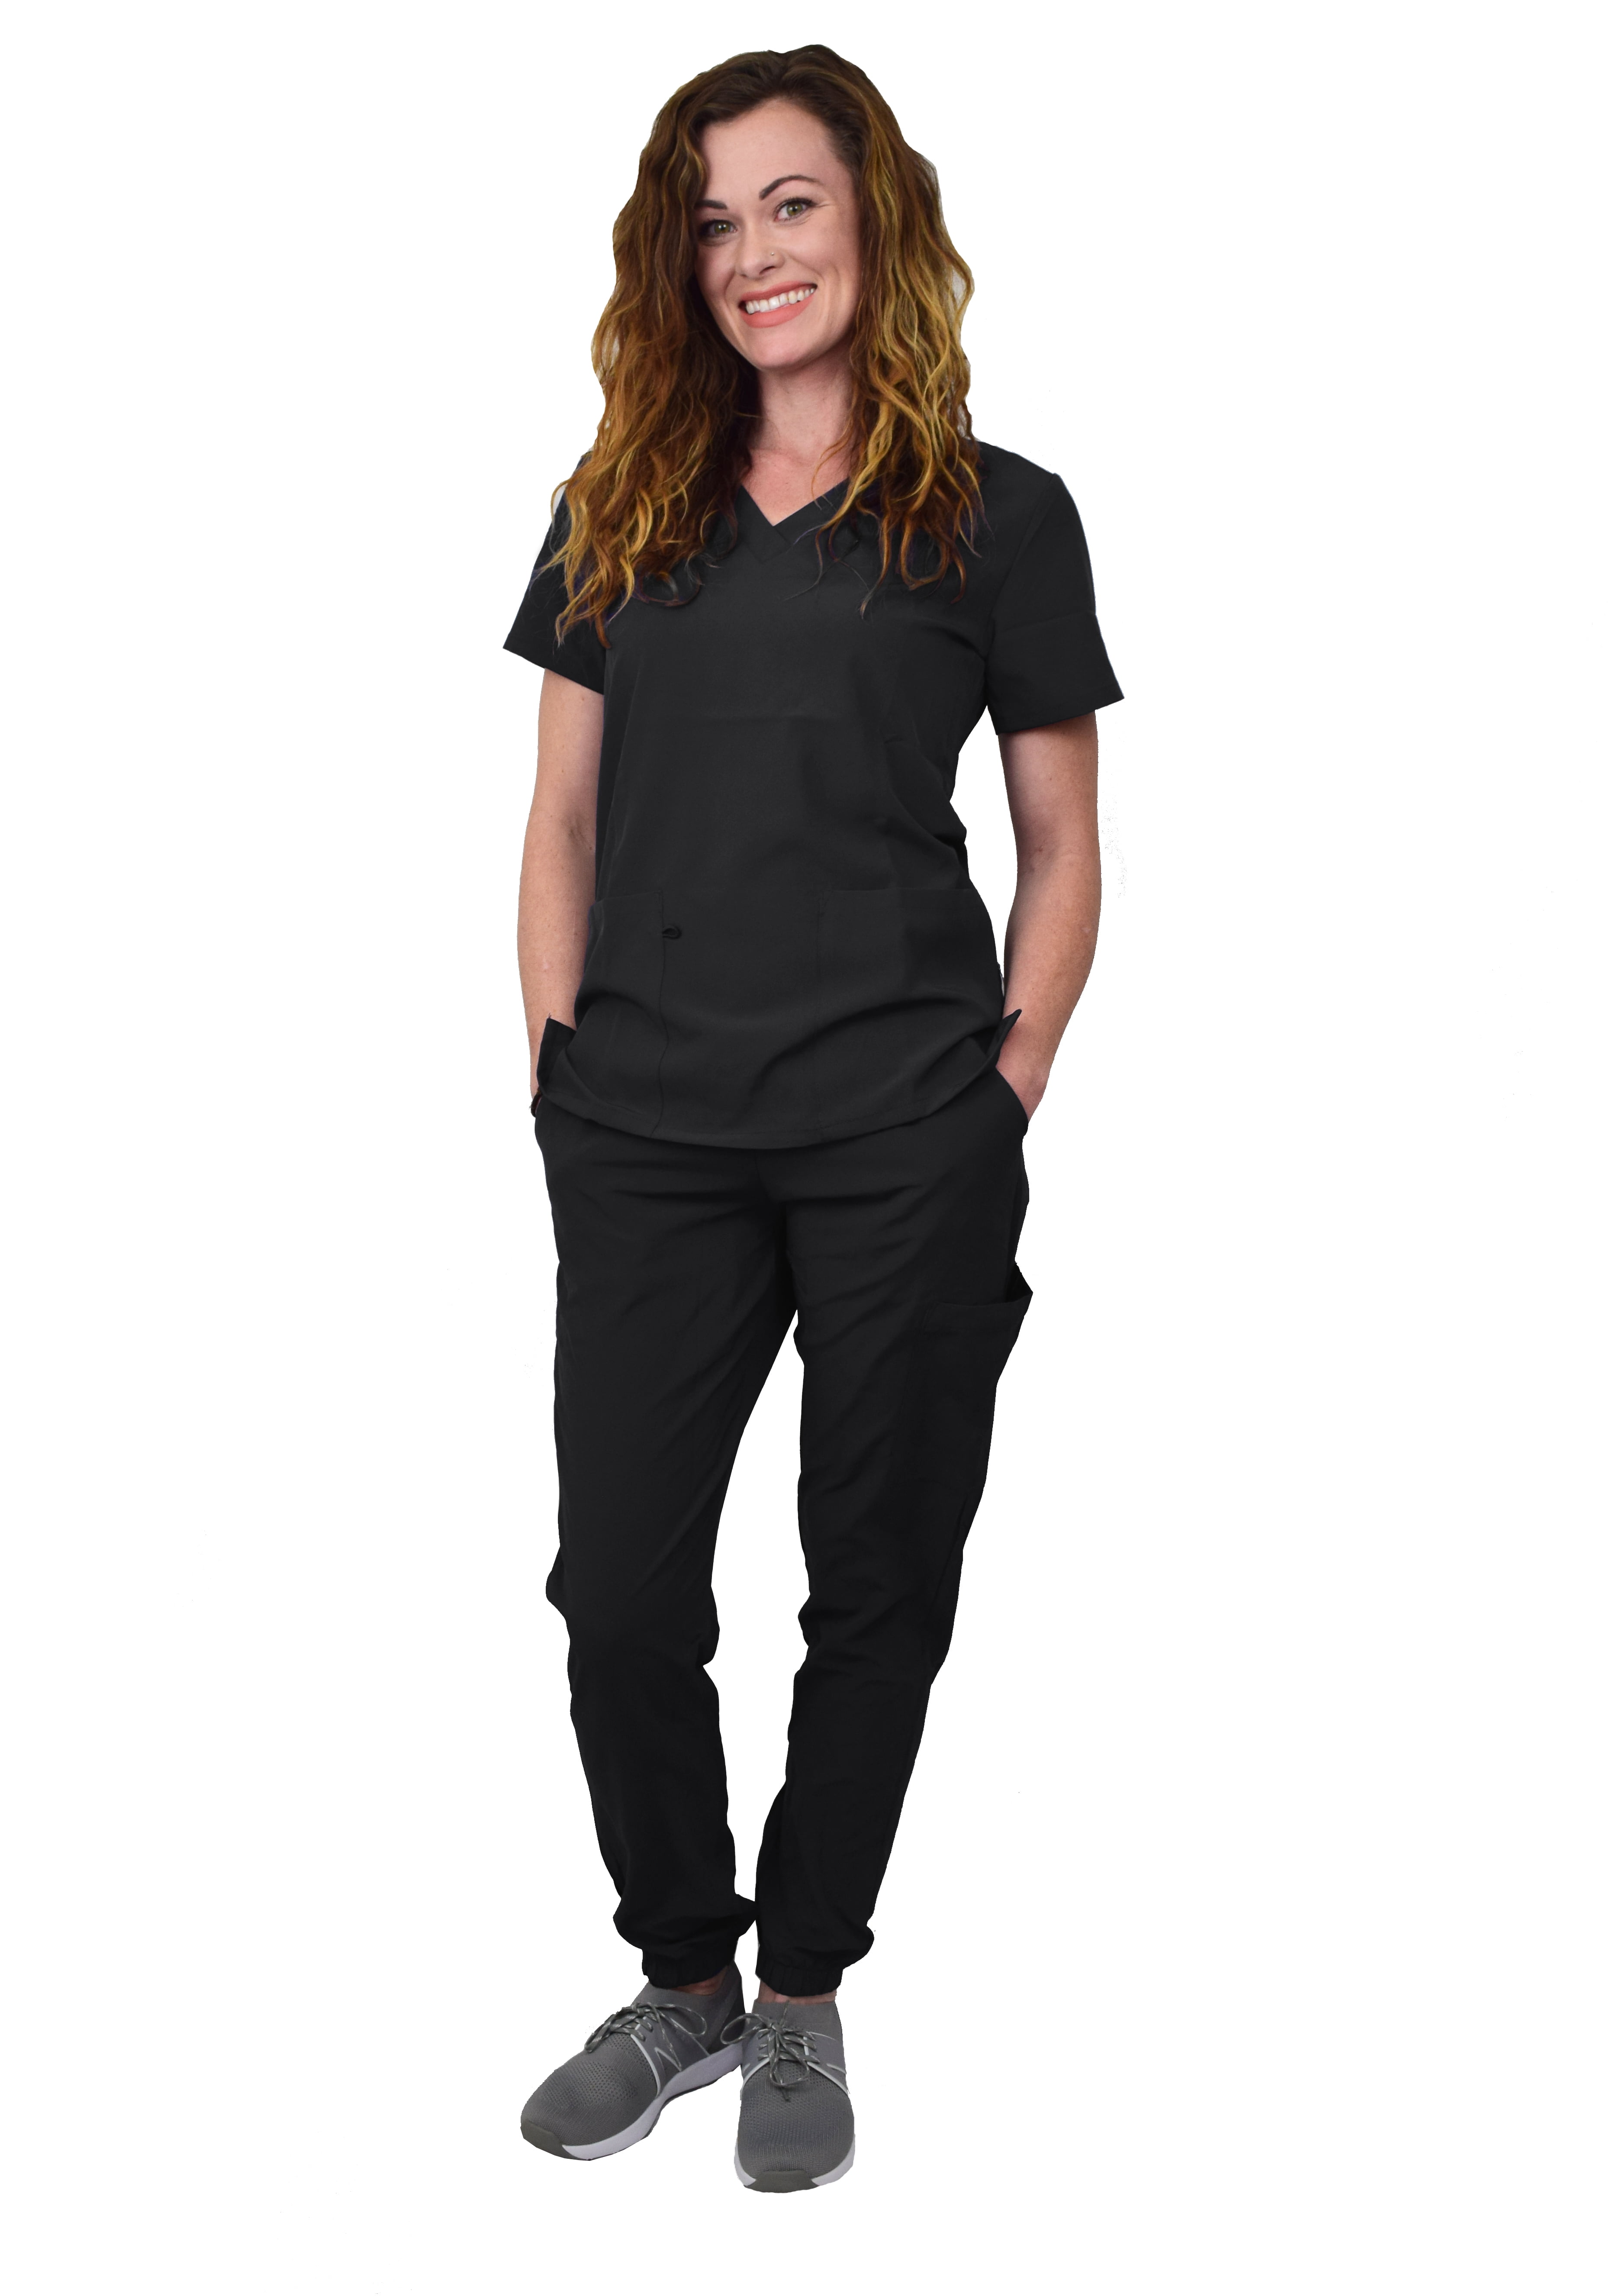 Women's Medical Nursing Jogger Scrub Set GT 4FLEX Top and Pant 